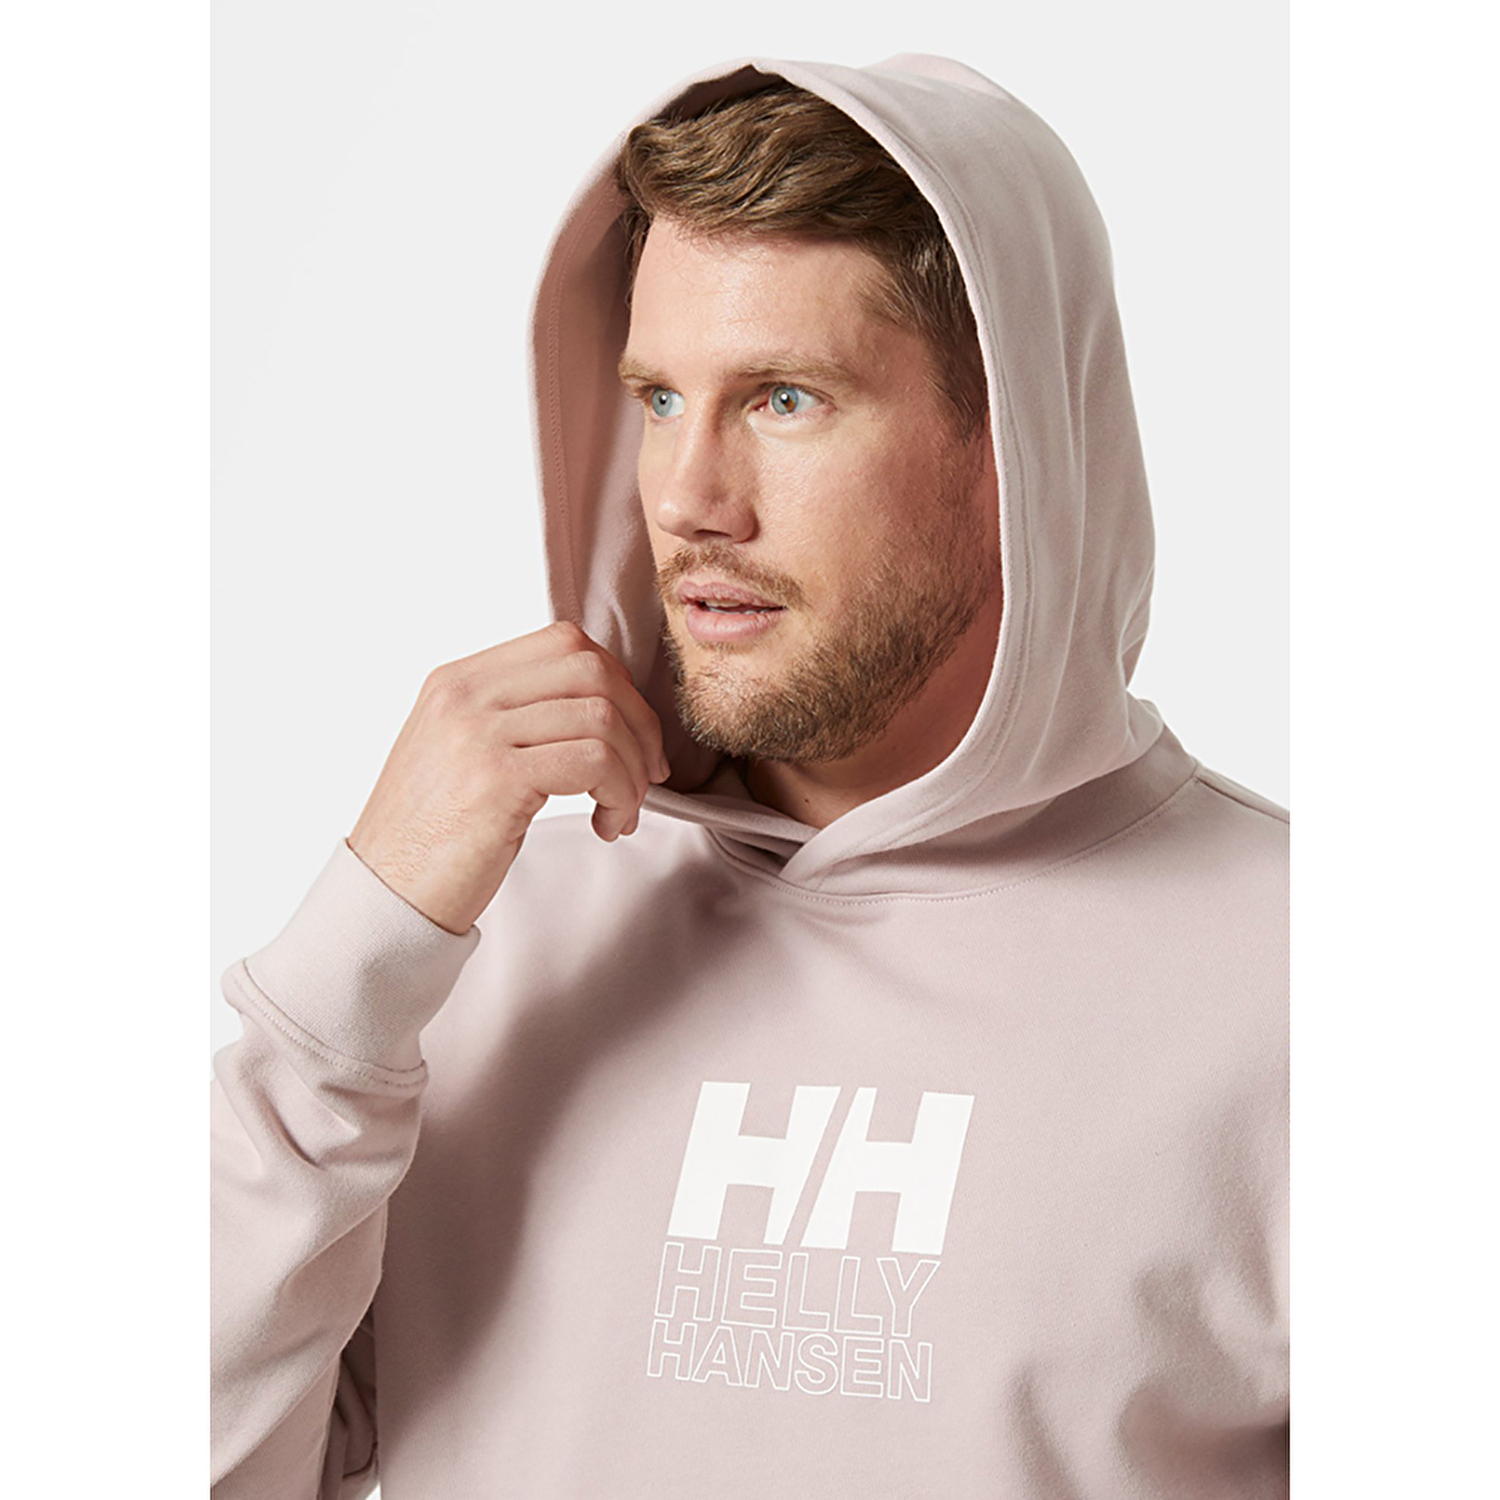 Helly Hansen Core Graphic Erkek Kapüşonlu Sweatshirt